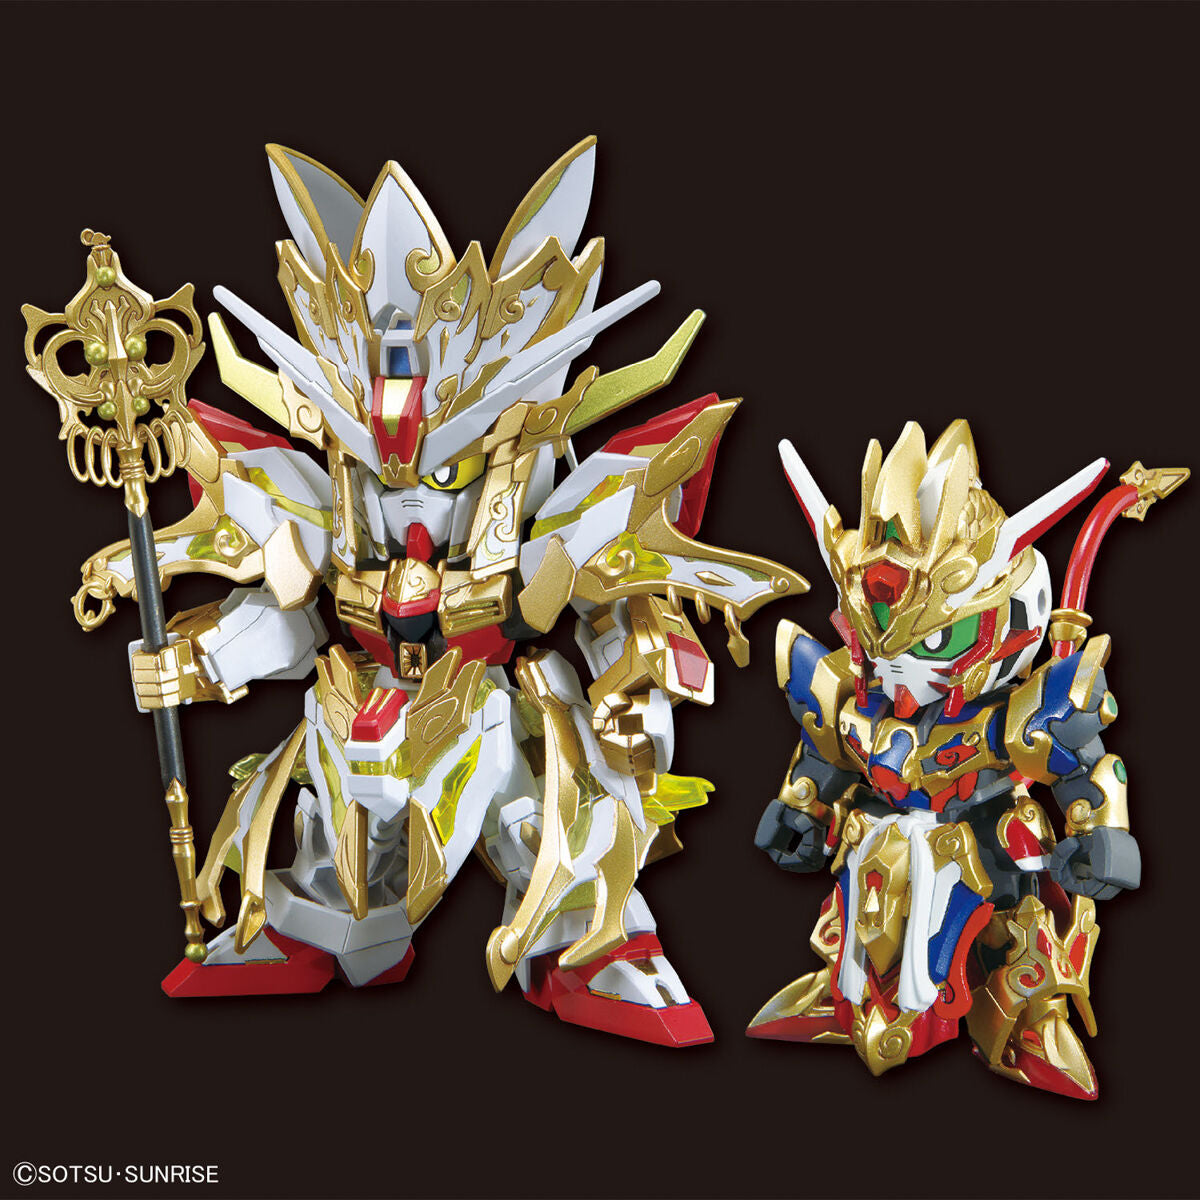 Bandai SDW Heroes 033 Goku Impulse Gundam &amp; Sanzang Strike Freedom Gundam Plastic Model Kit